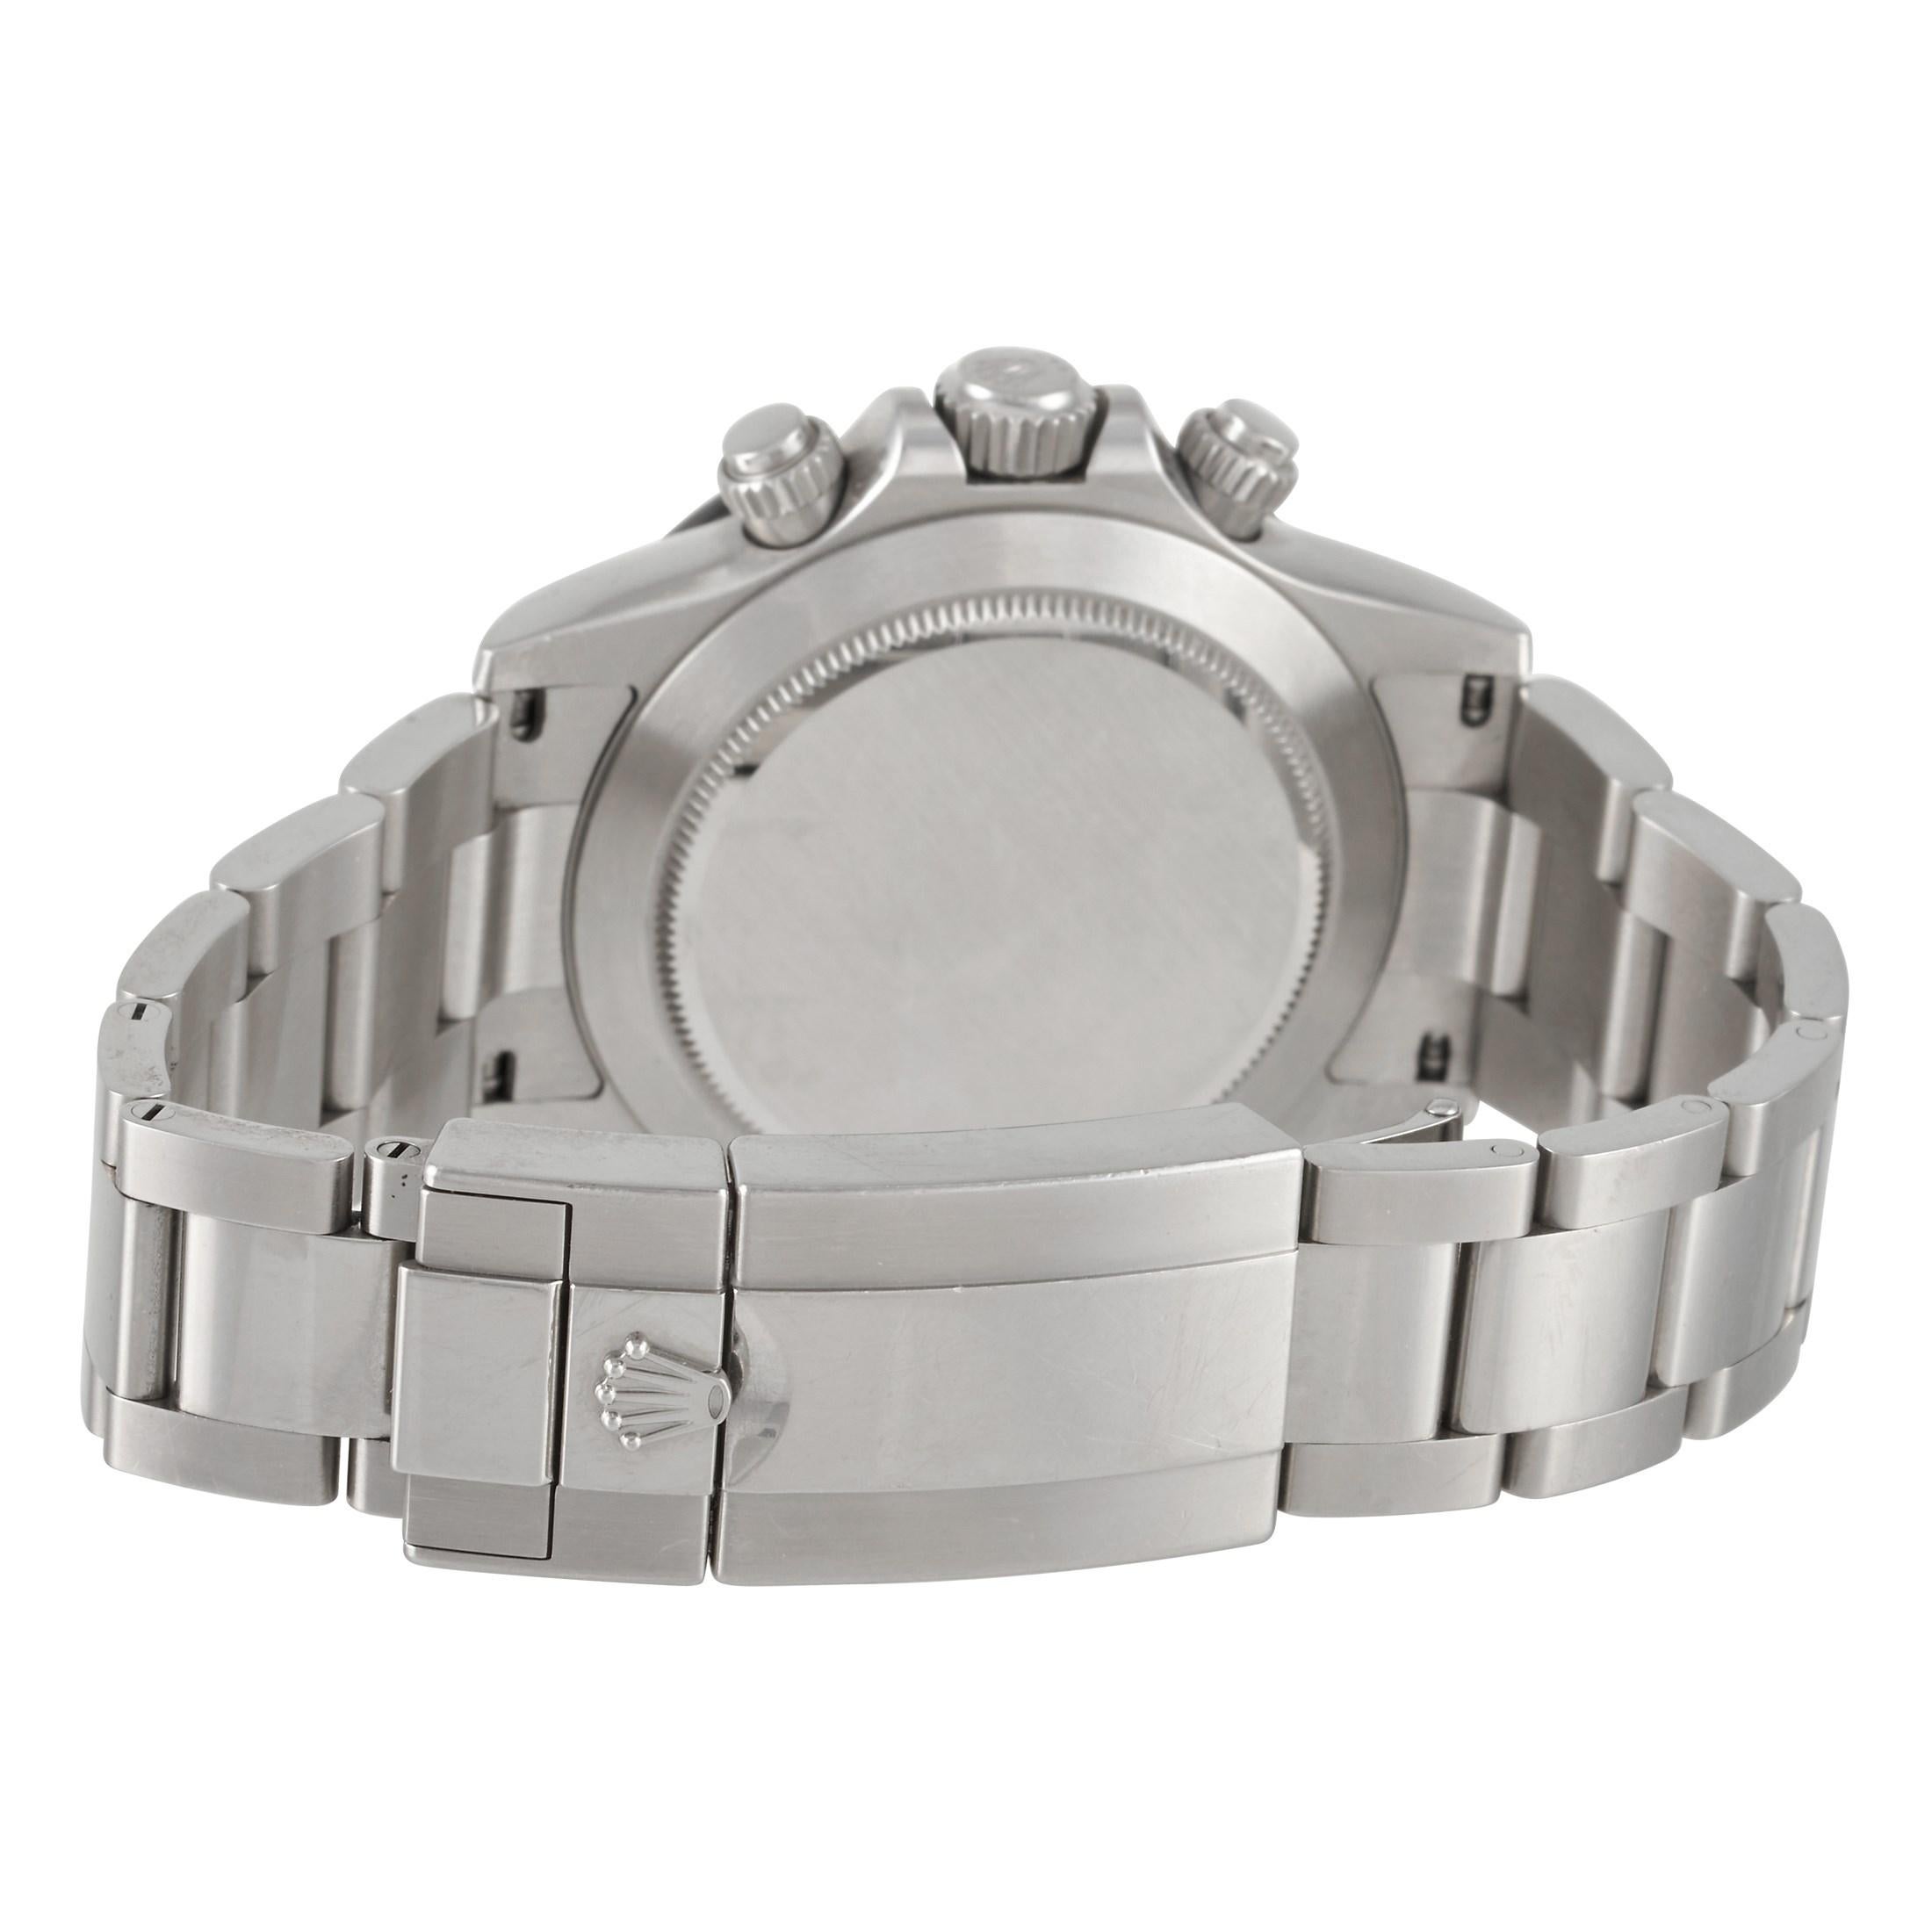 Men's Rolex Cosmograph Daytona Watch 116500LN